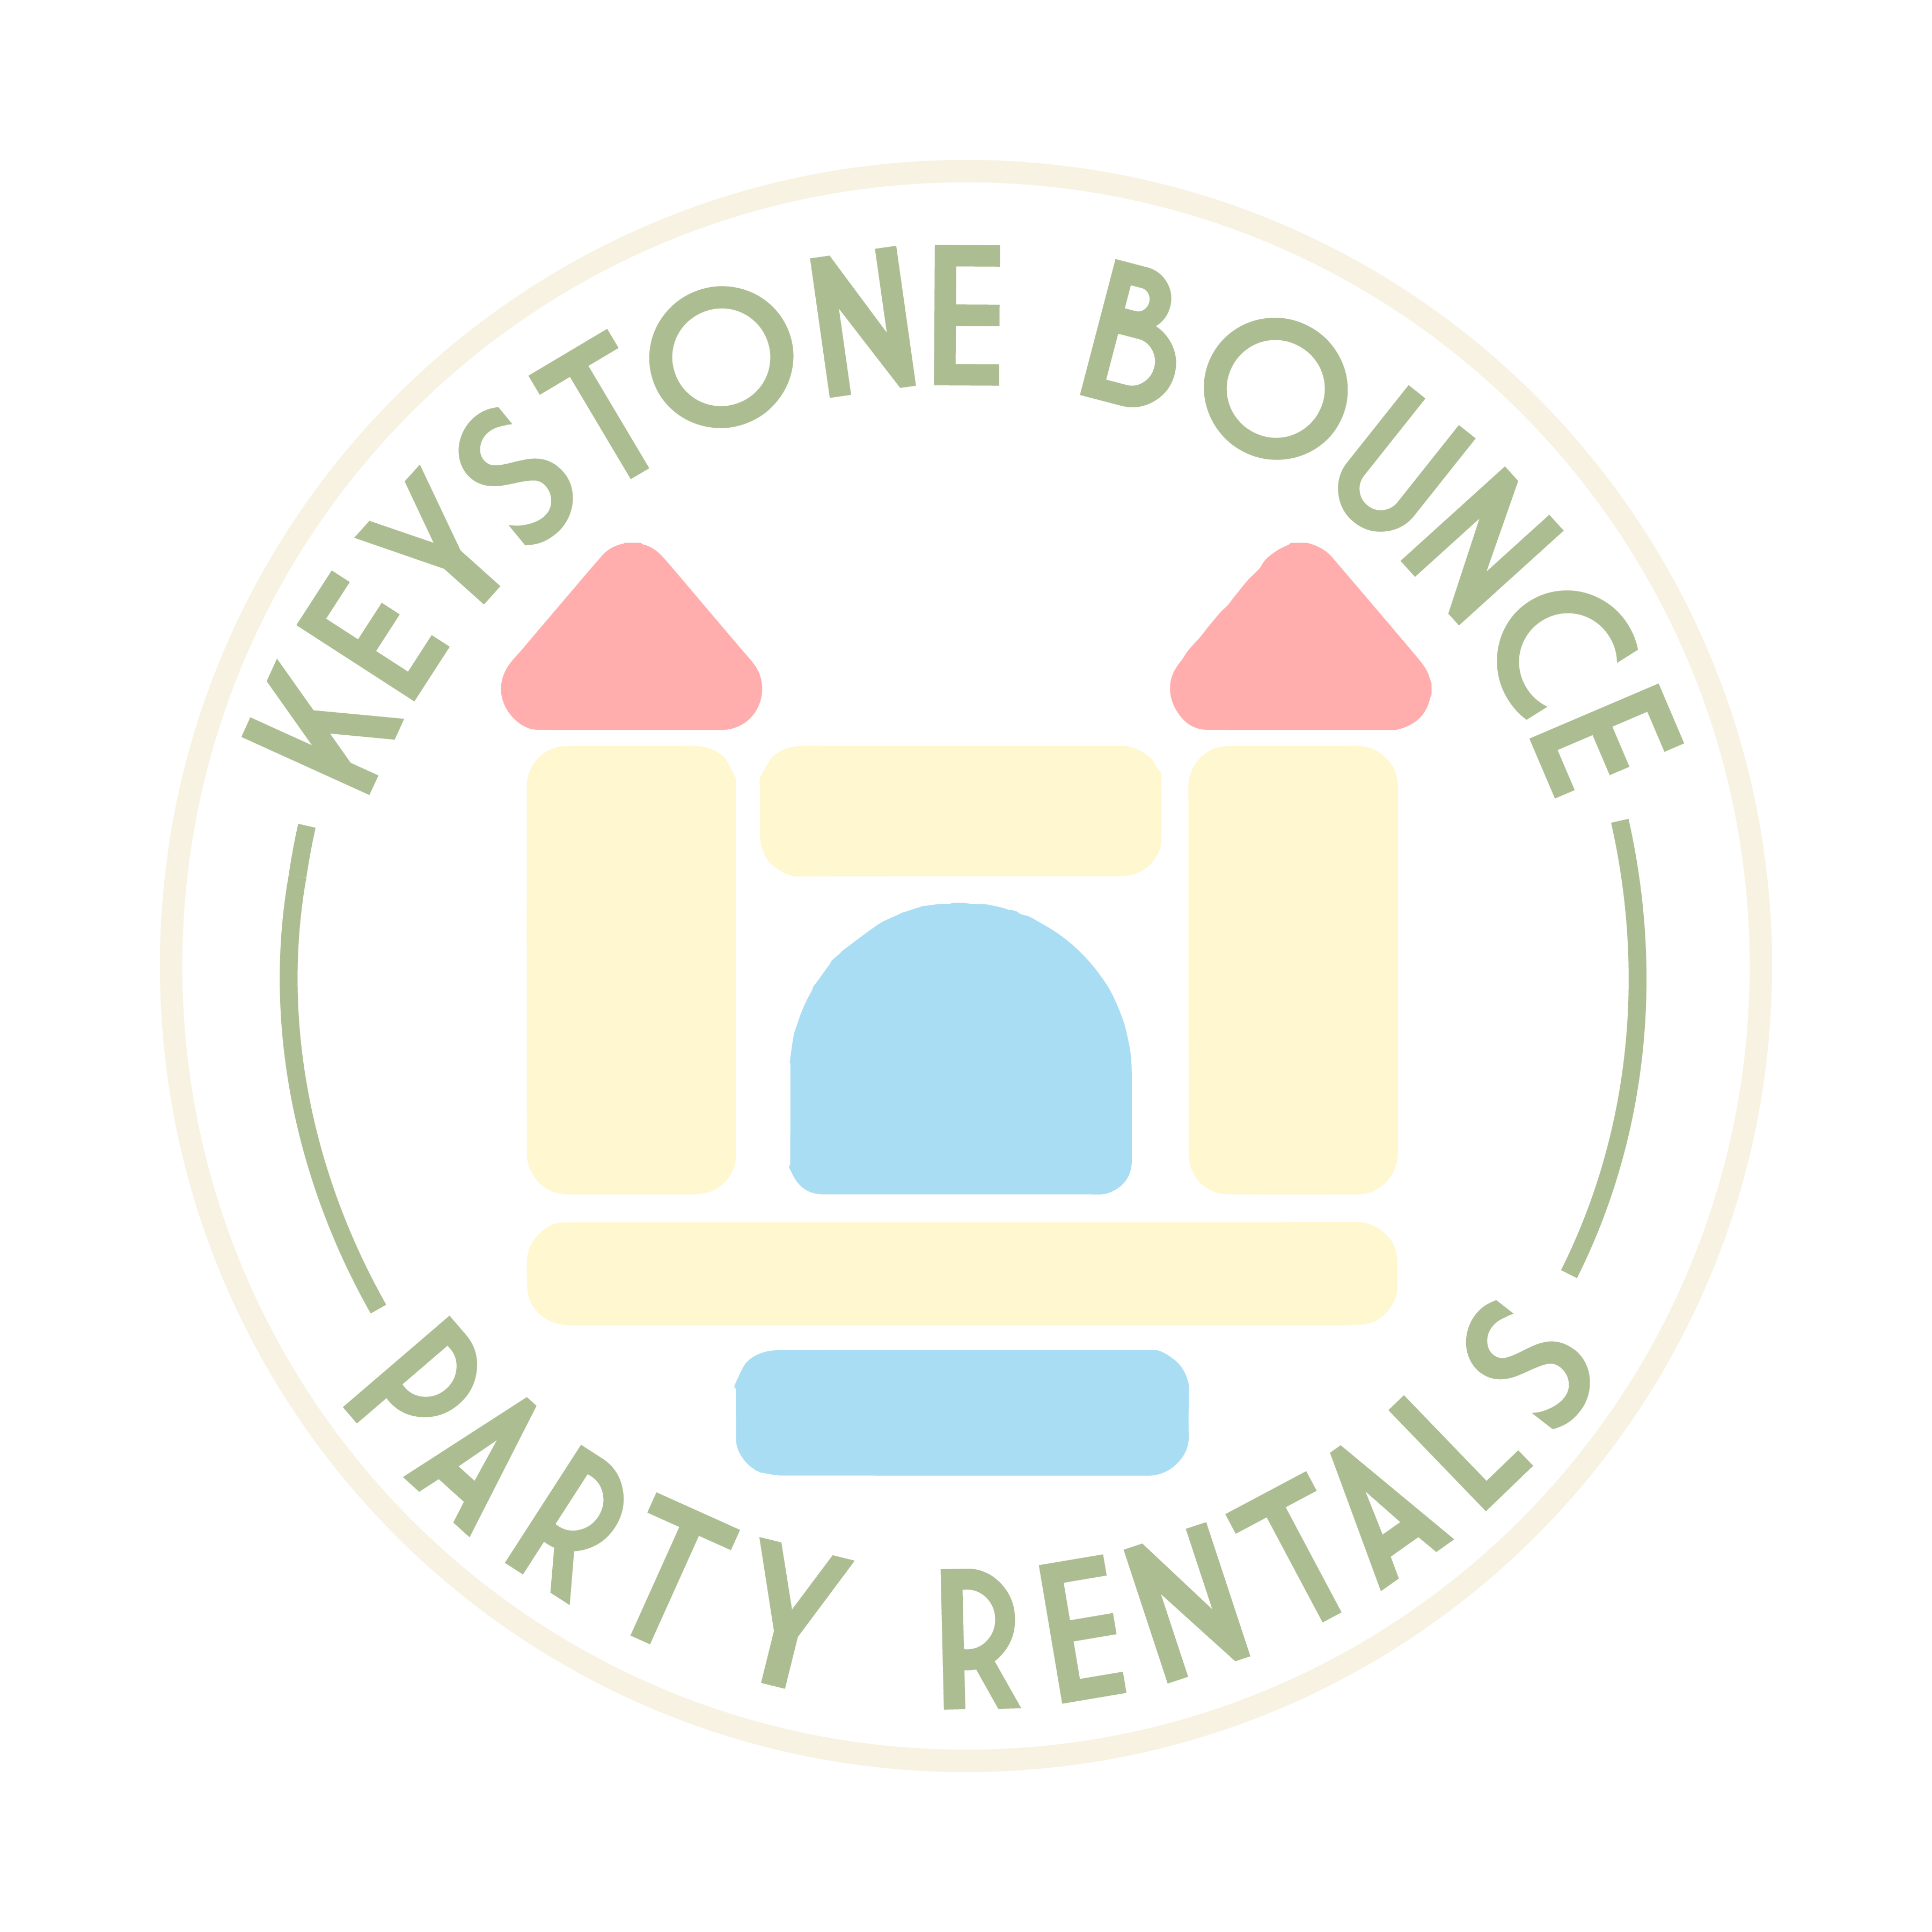 KeystoneBounce Logo WhiteBackground Inventory